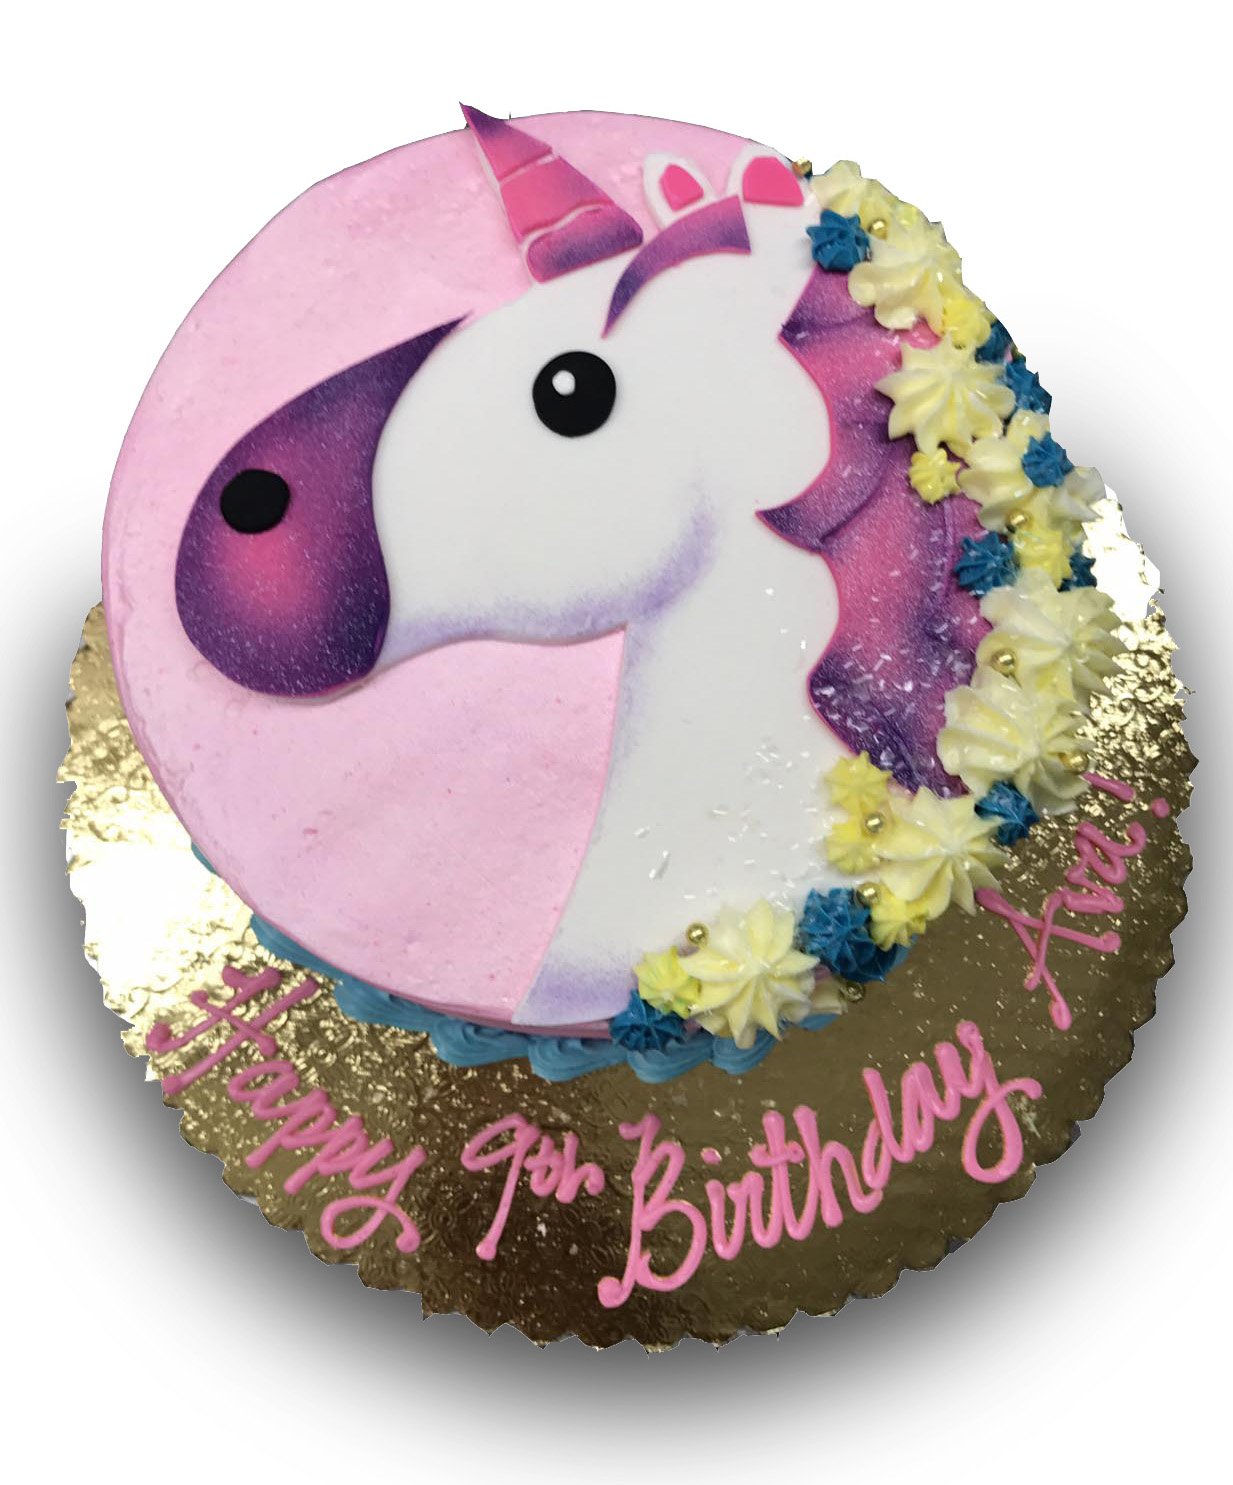 Buttercream cake with fondant unicorn and fondant flowers